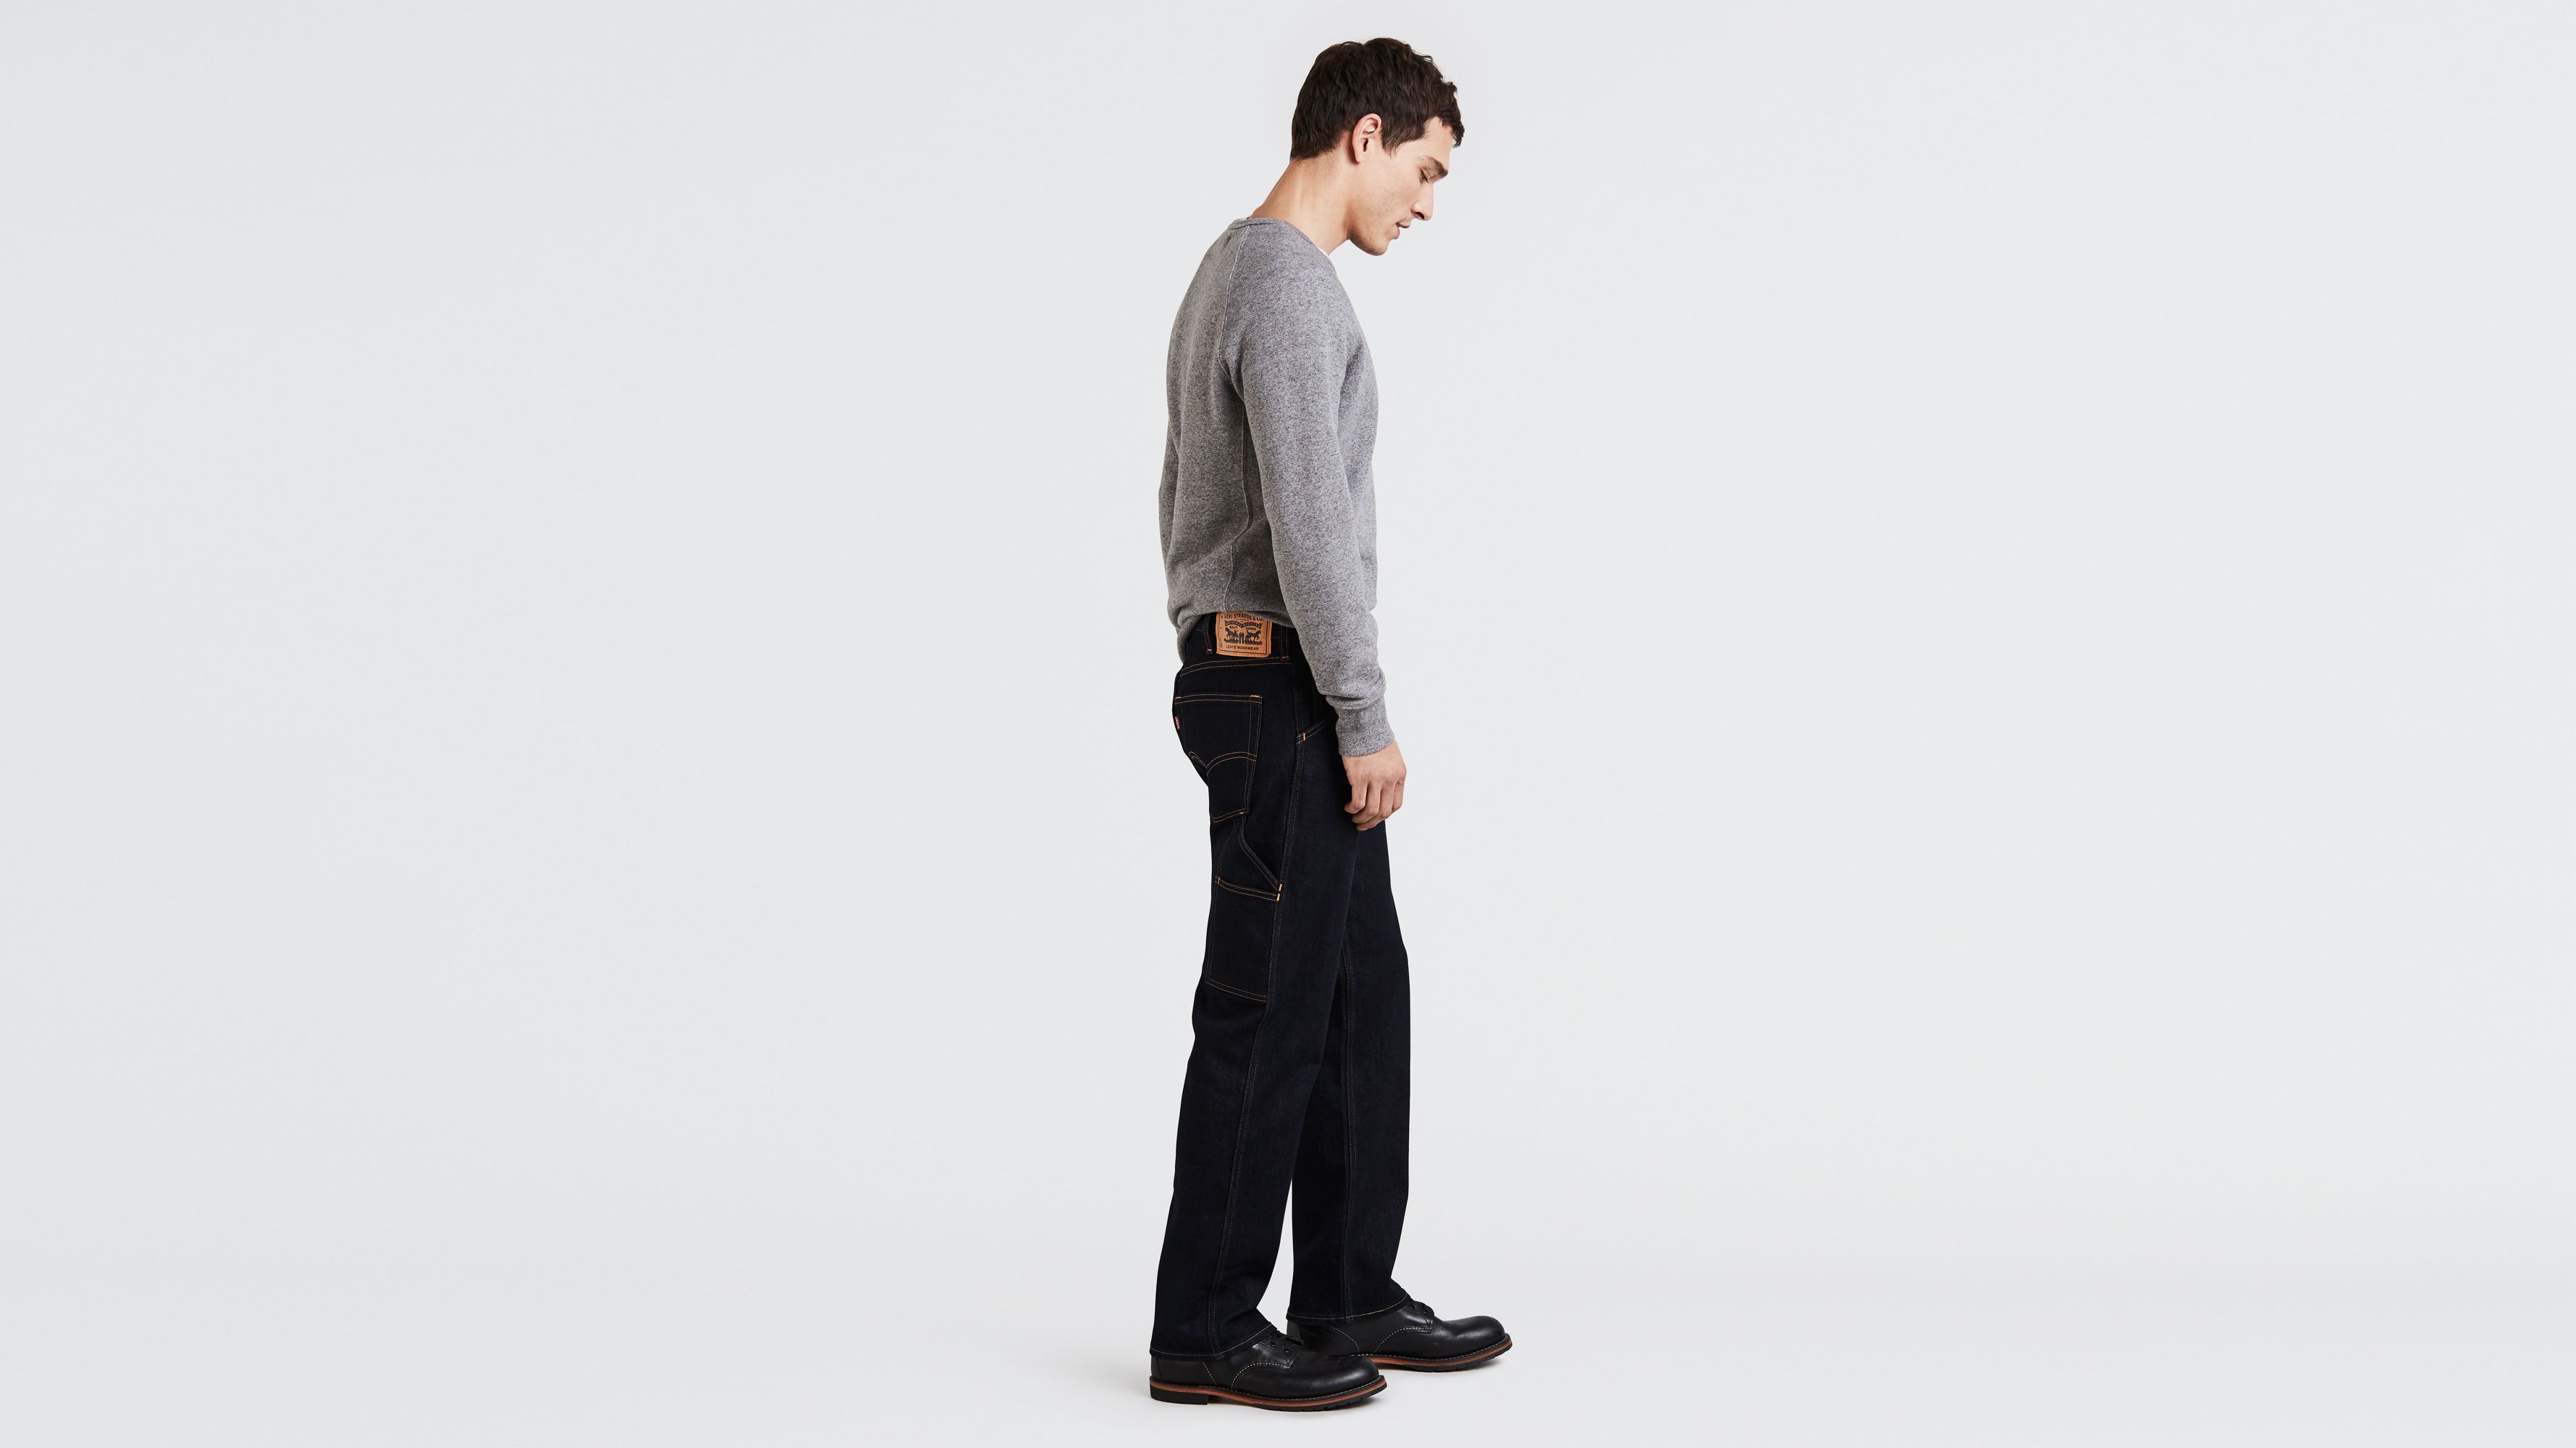 Levi's® Workwear 545™ Athletic Fit Utility Men's Jeans - Dark Wash